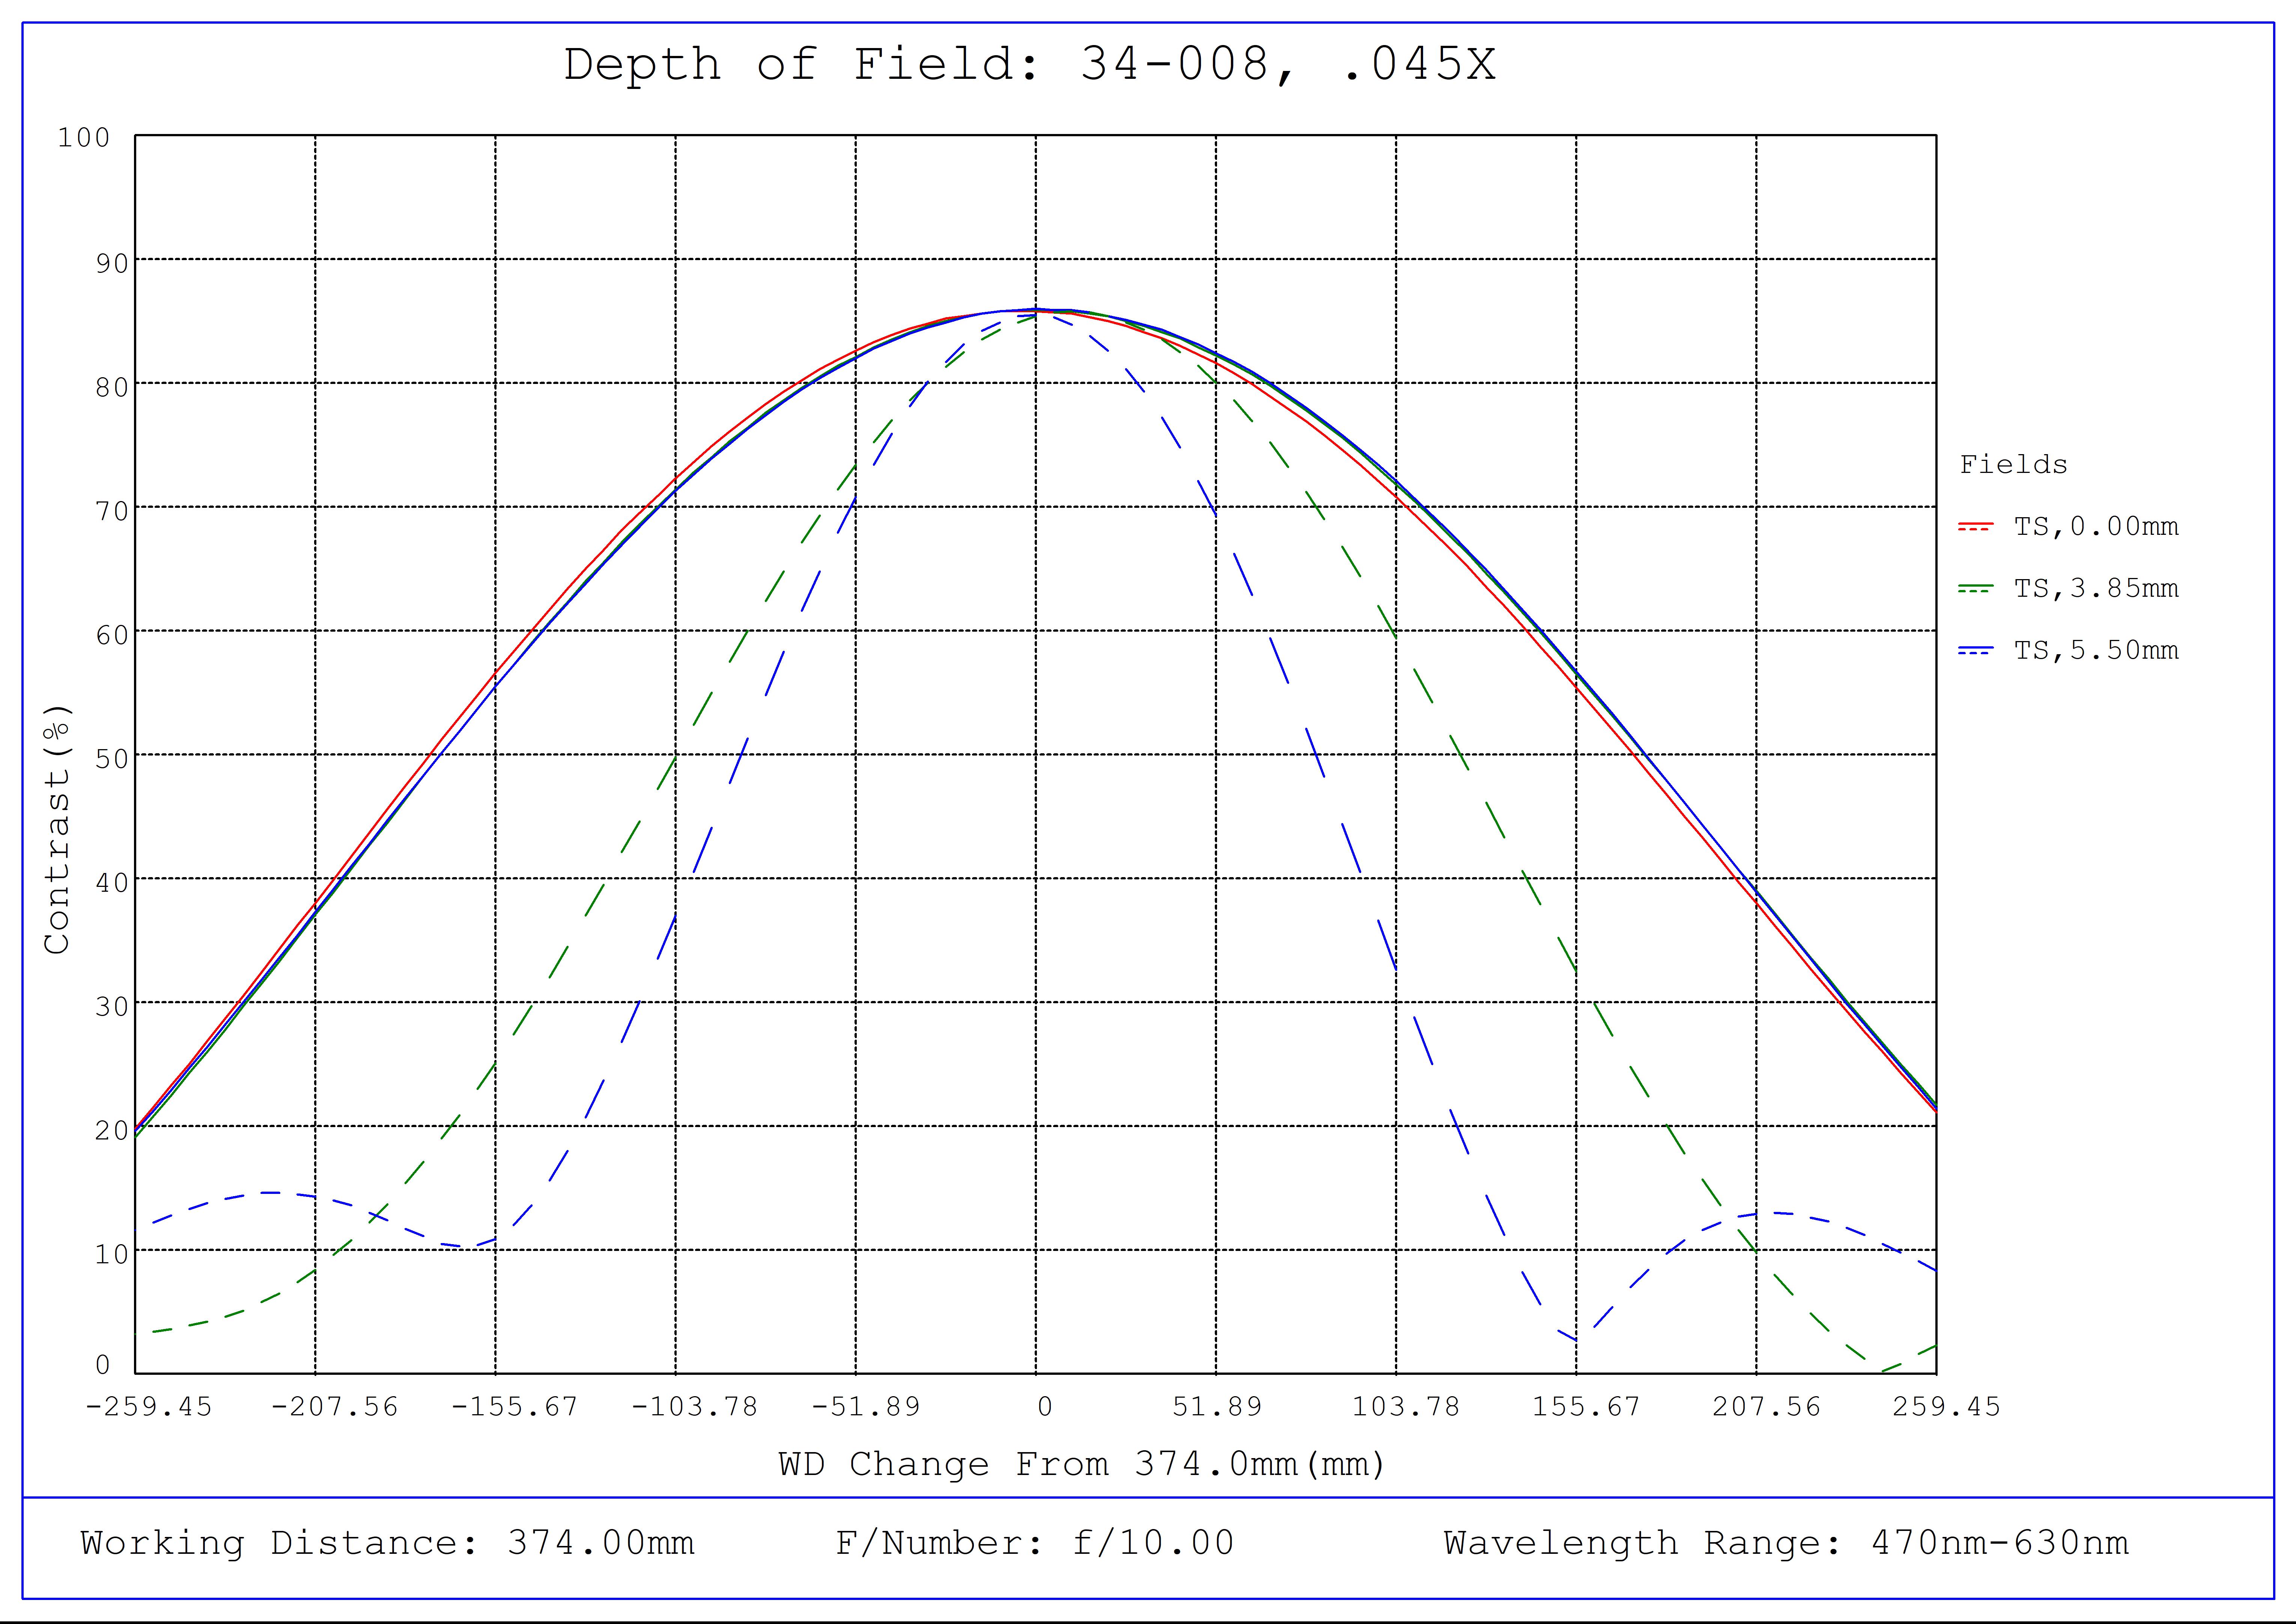 #34-008, 0.045X, 2/3" C-Mount TitanTL® Telecentric Lens, Depth of Field Plot, 374mm Working Distance, f10